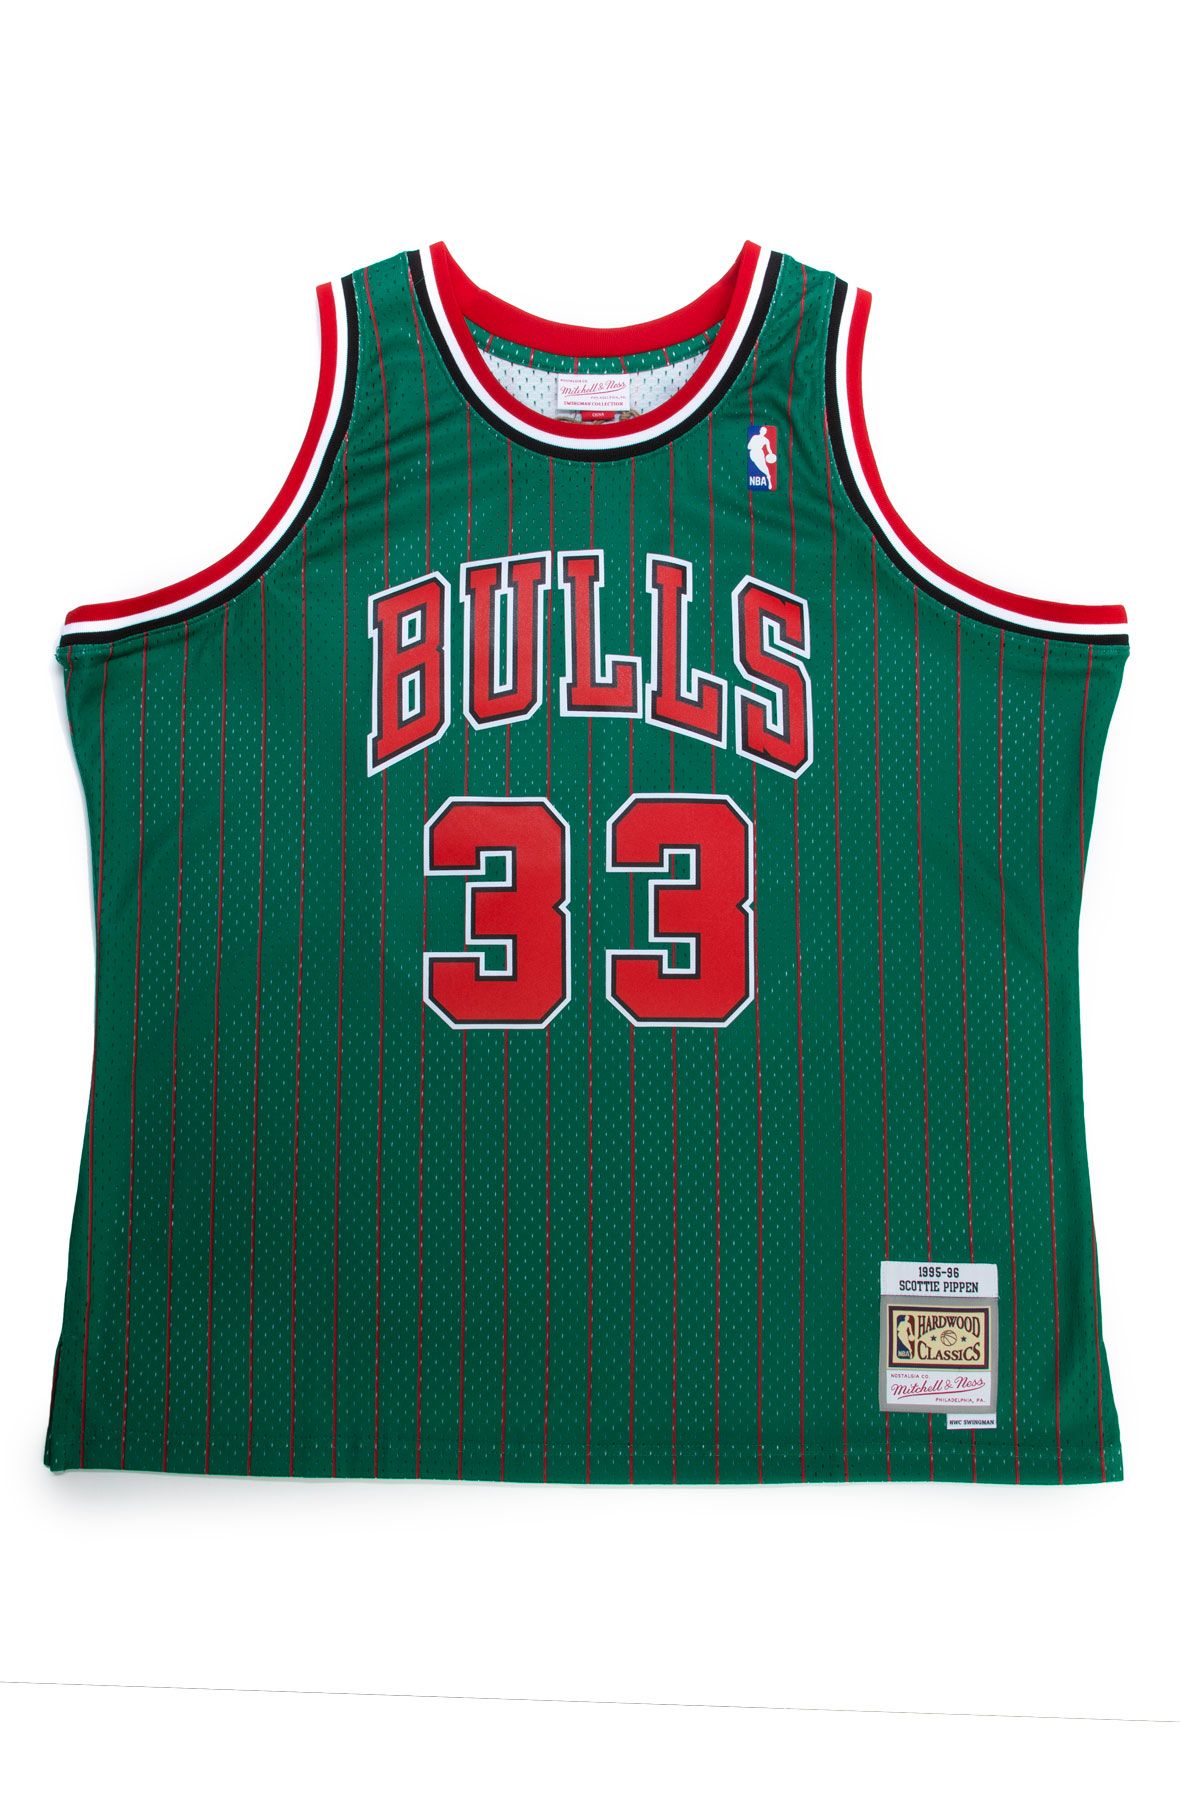 Ghost Green Camo Swingman Scottie Pippen Chicago Bulls 1997-98 Jersey -  Shop Mitchell & Ness Swingman Jerseys and Replicas Mitchell & Ness  Nostalgia Co.